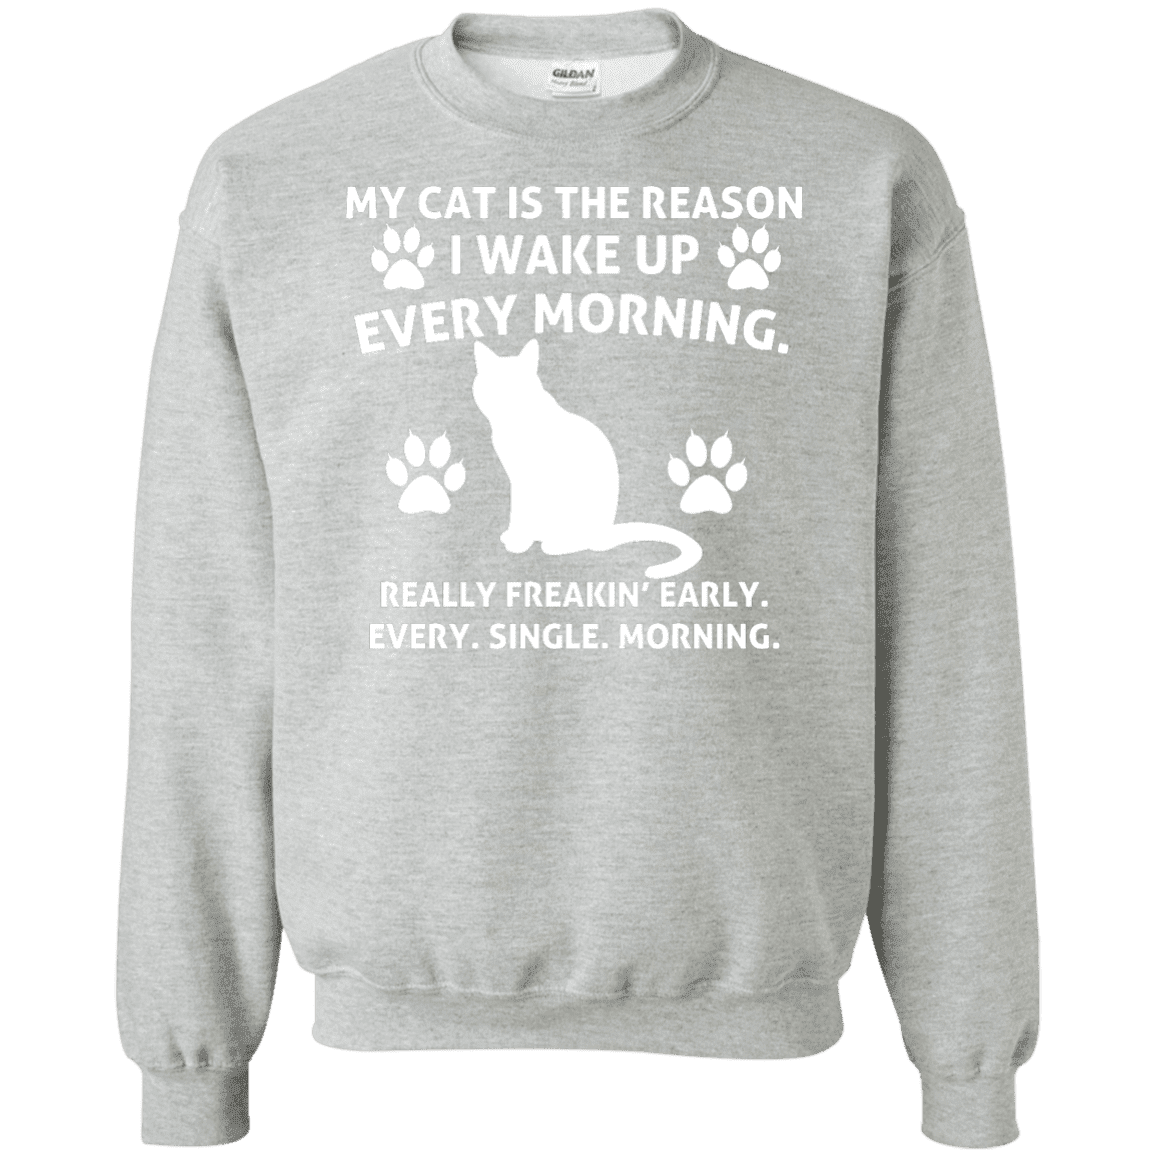 My Cat Is The Reason - Sweatshirt.